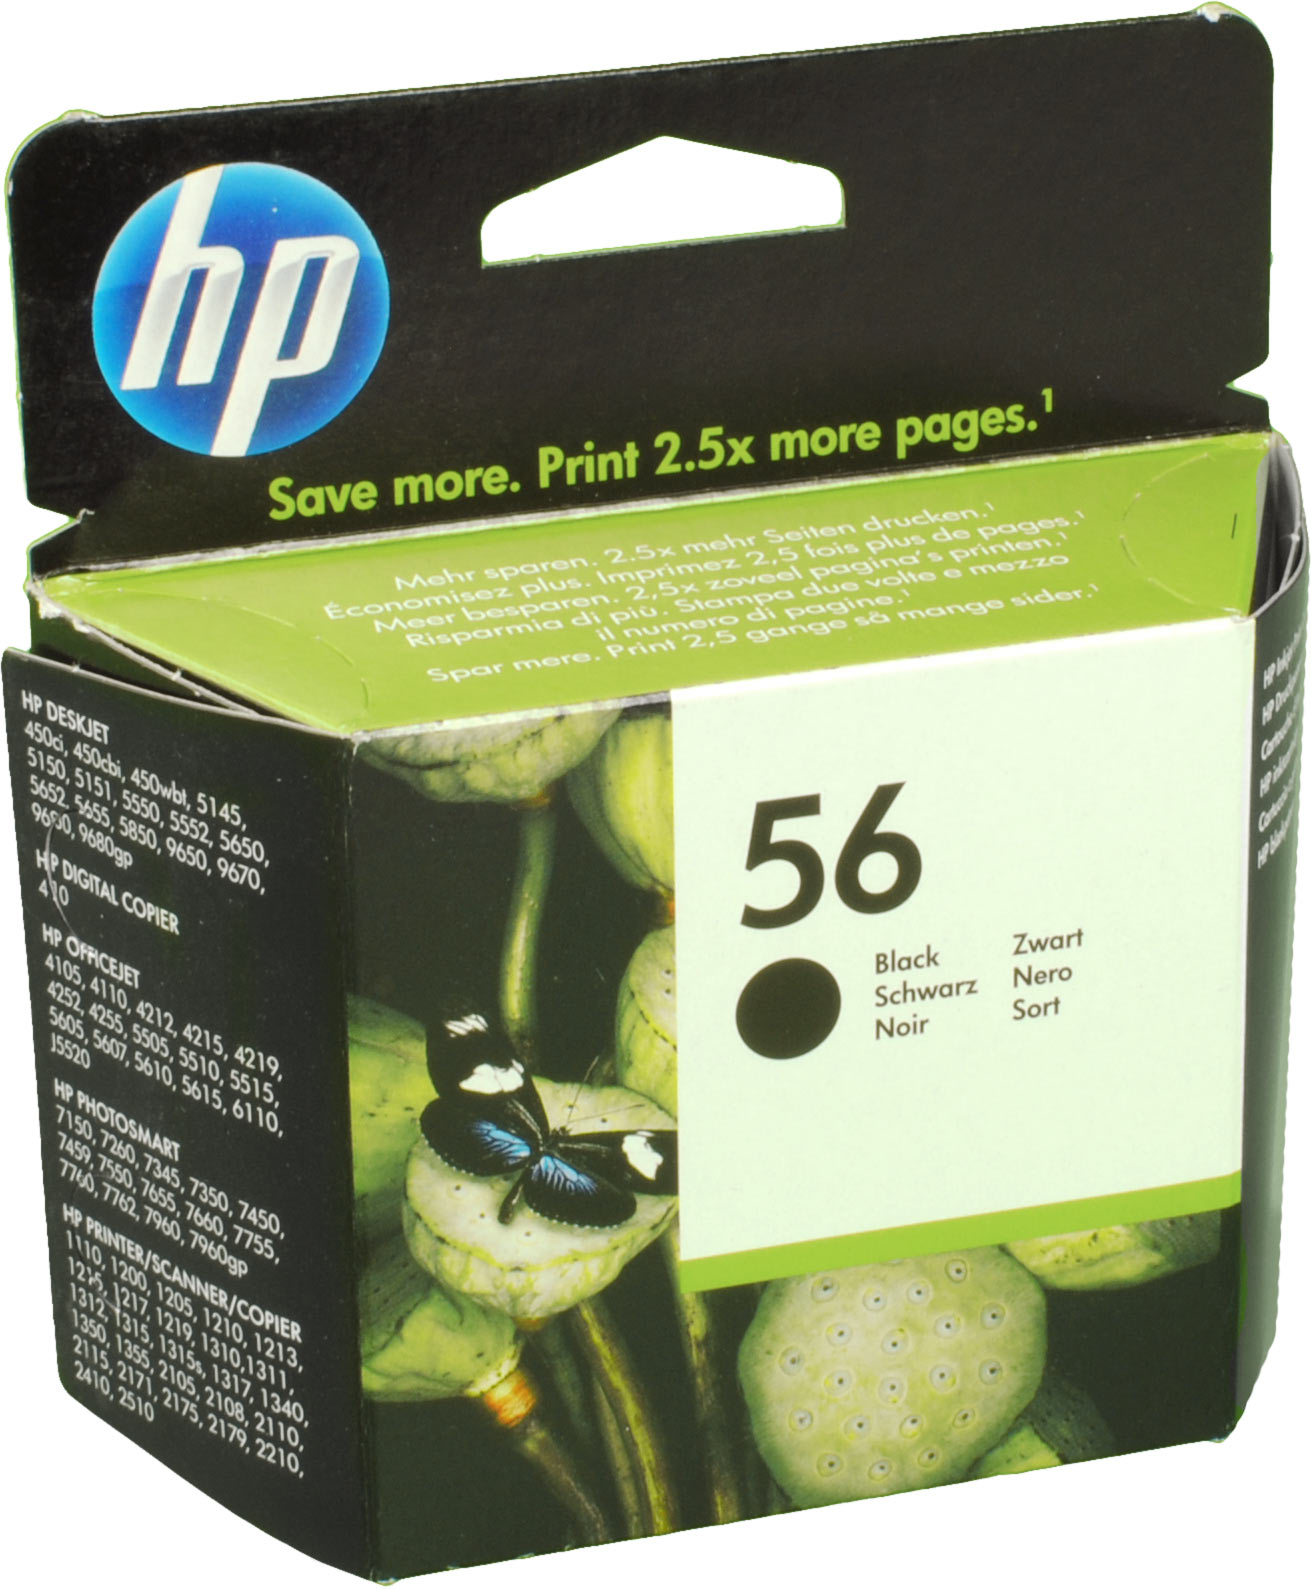 HP Tinte C6656AE  56  schwarz